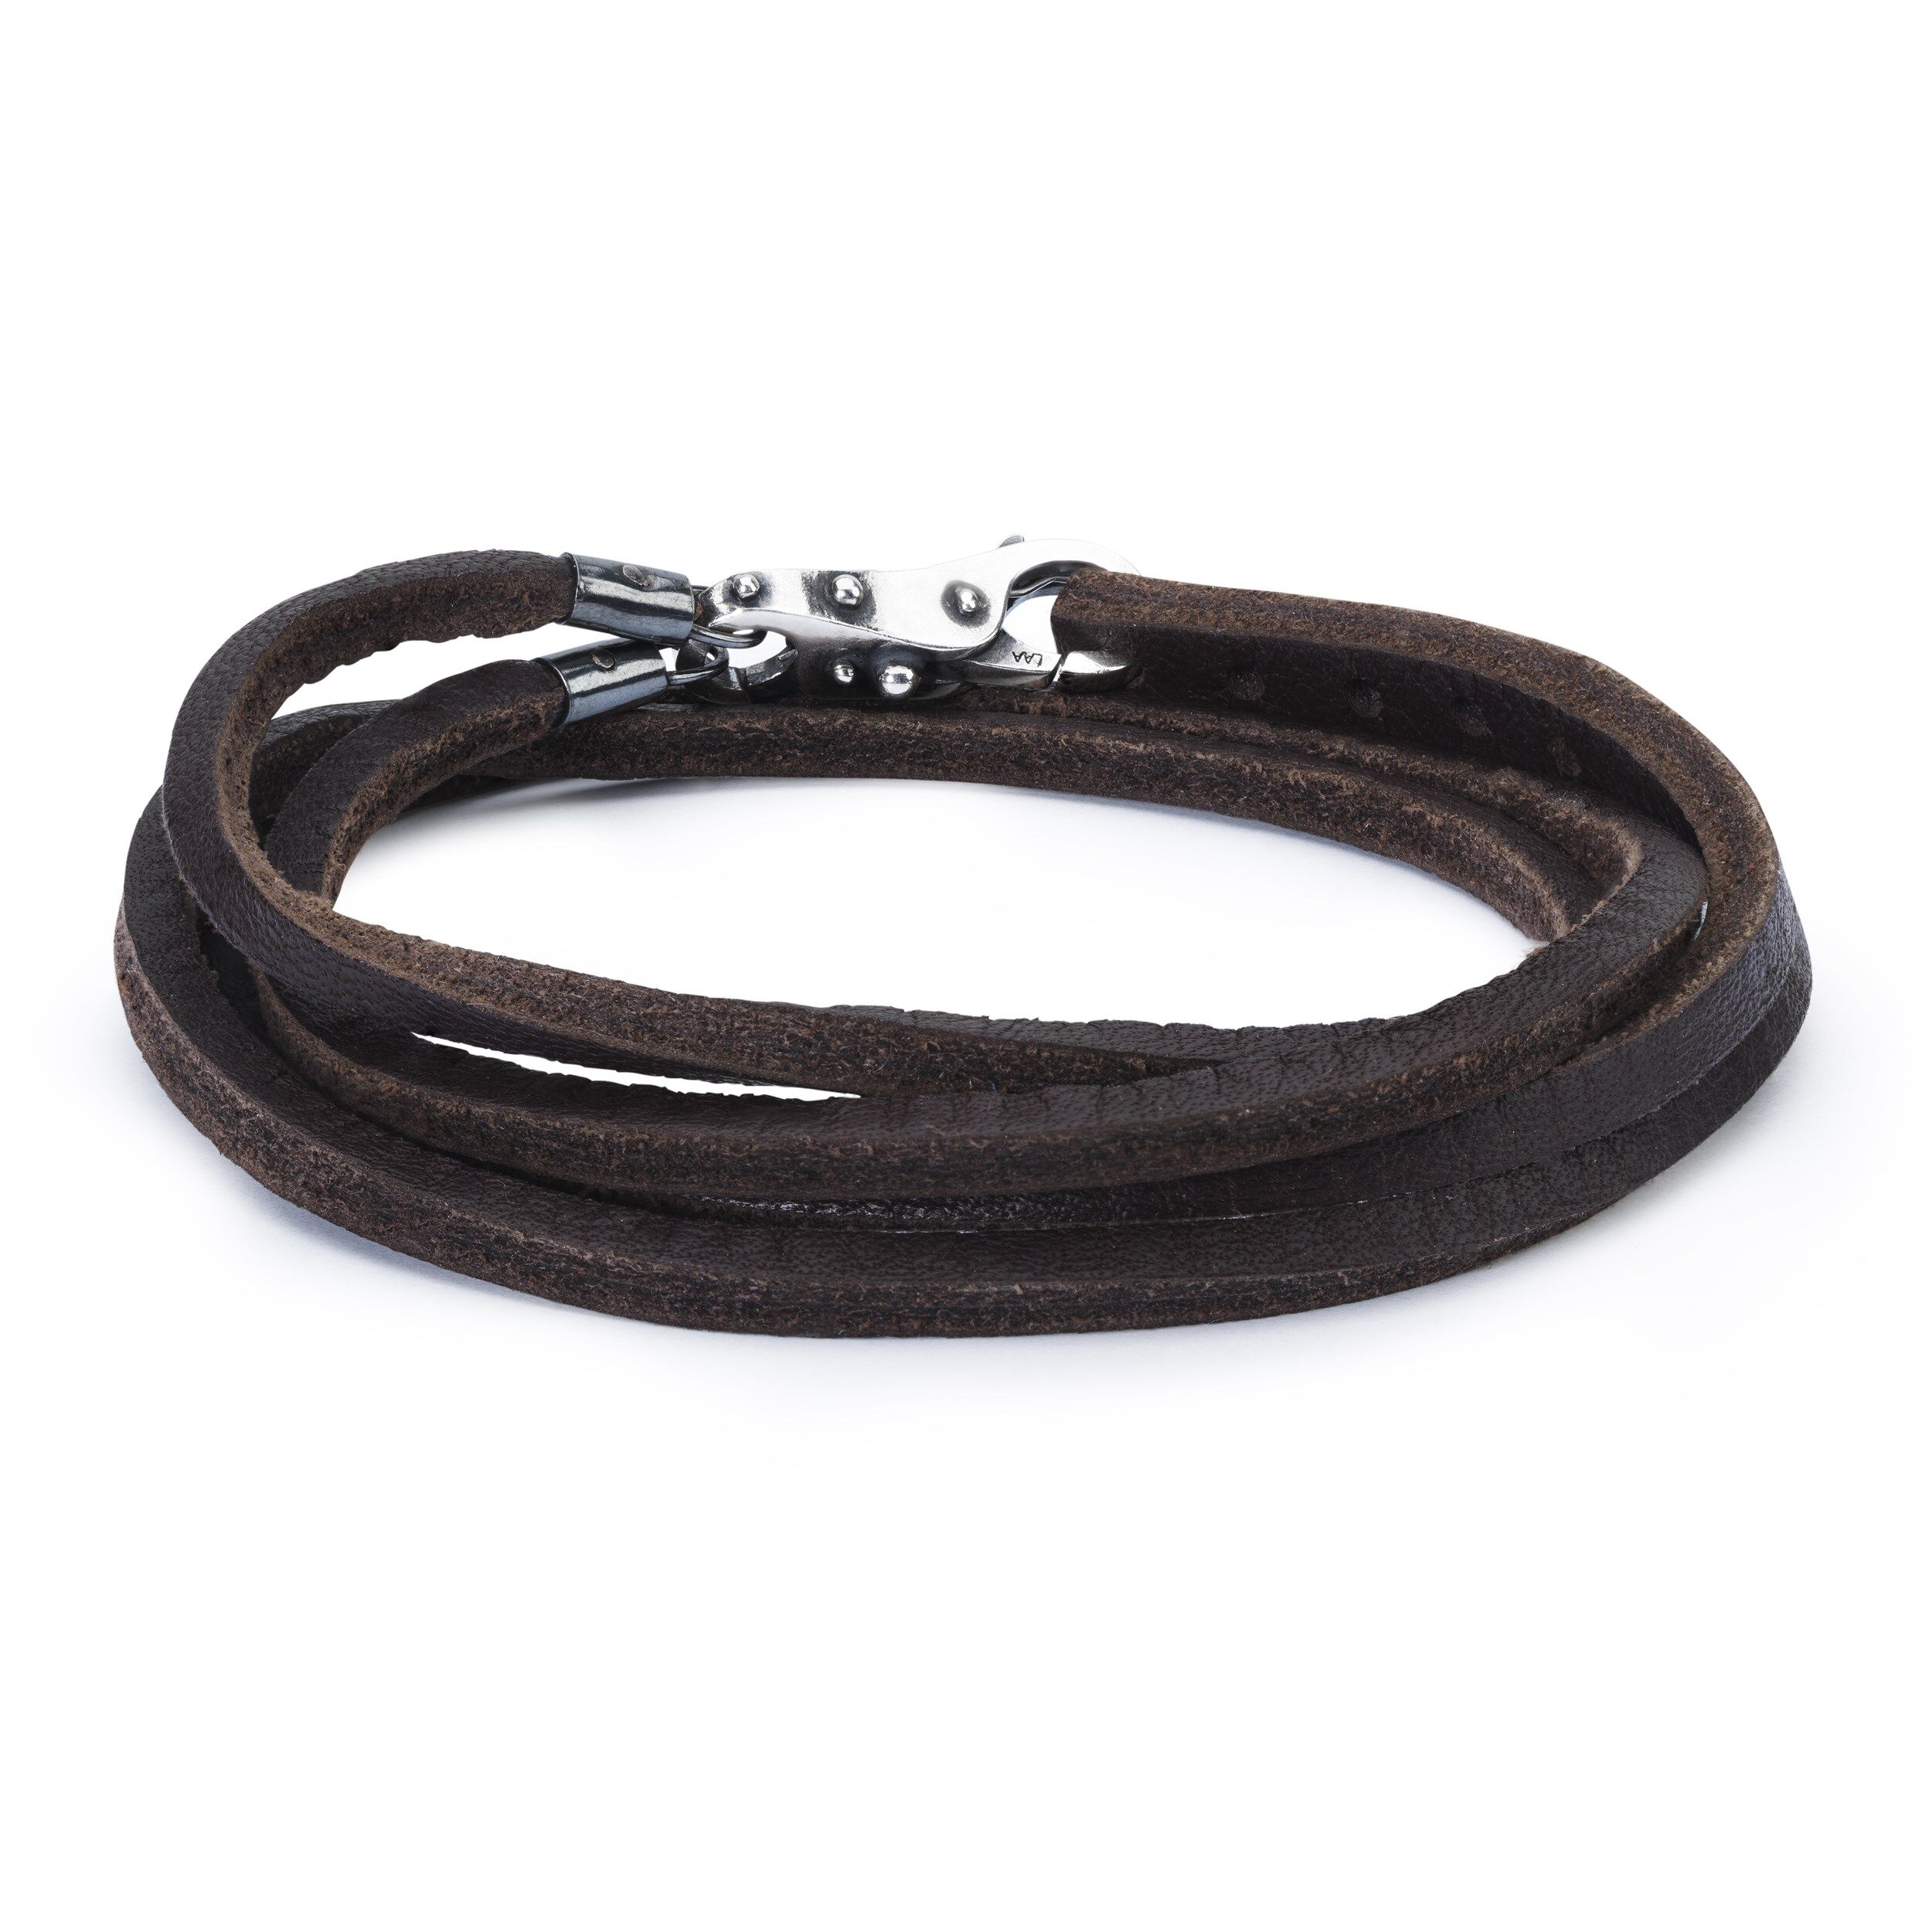 Leather Bracelet Brown/Silver